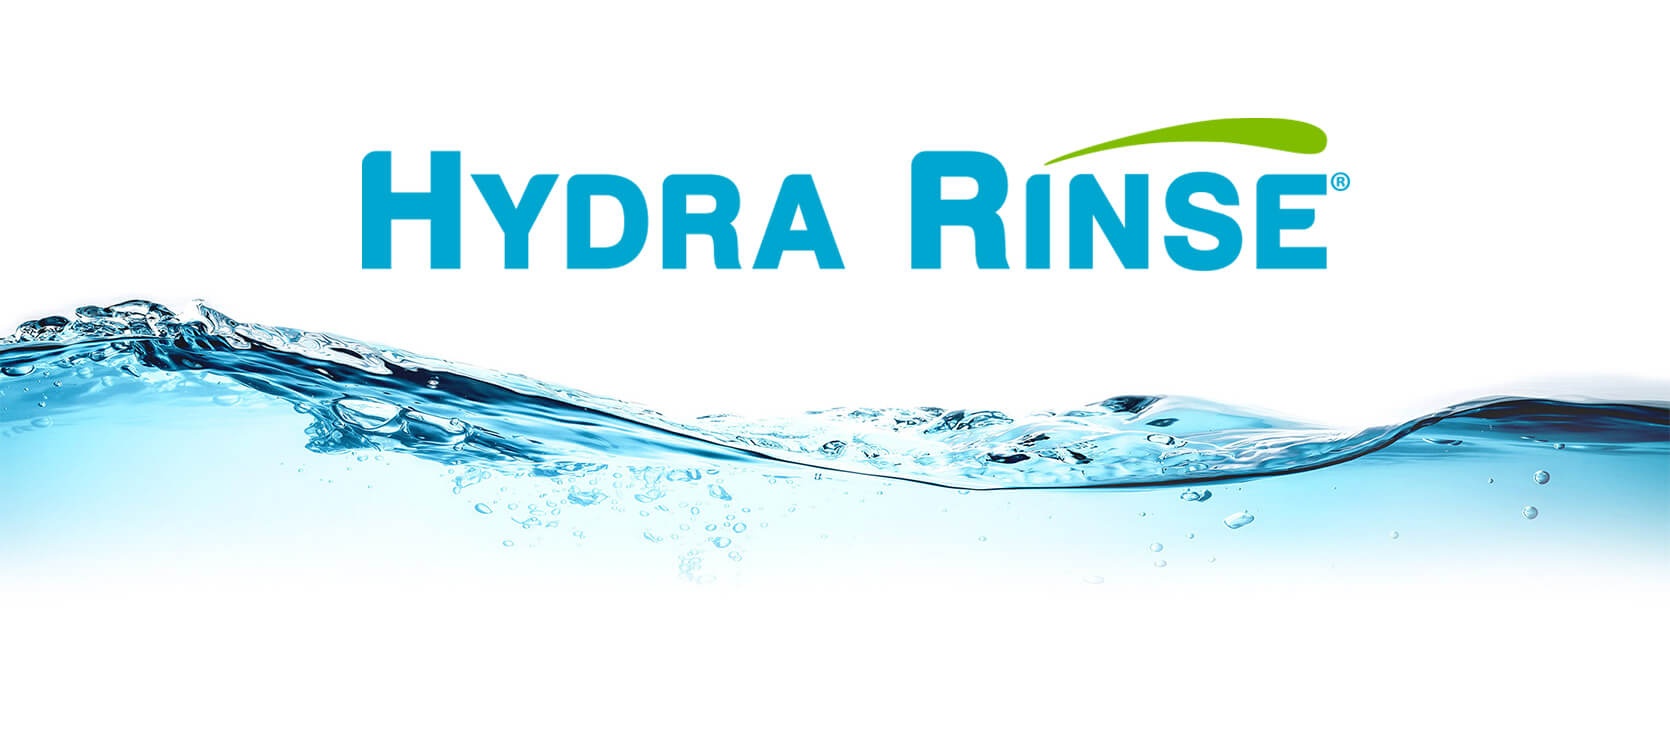 Hydra rinse